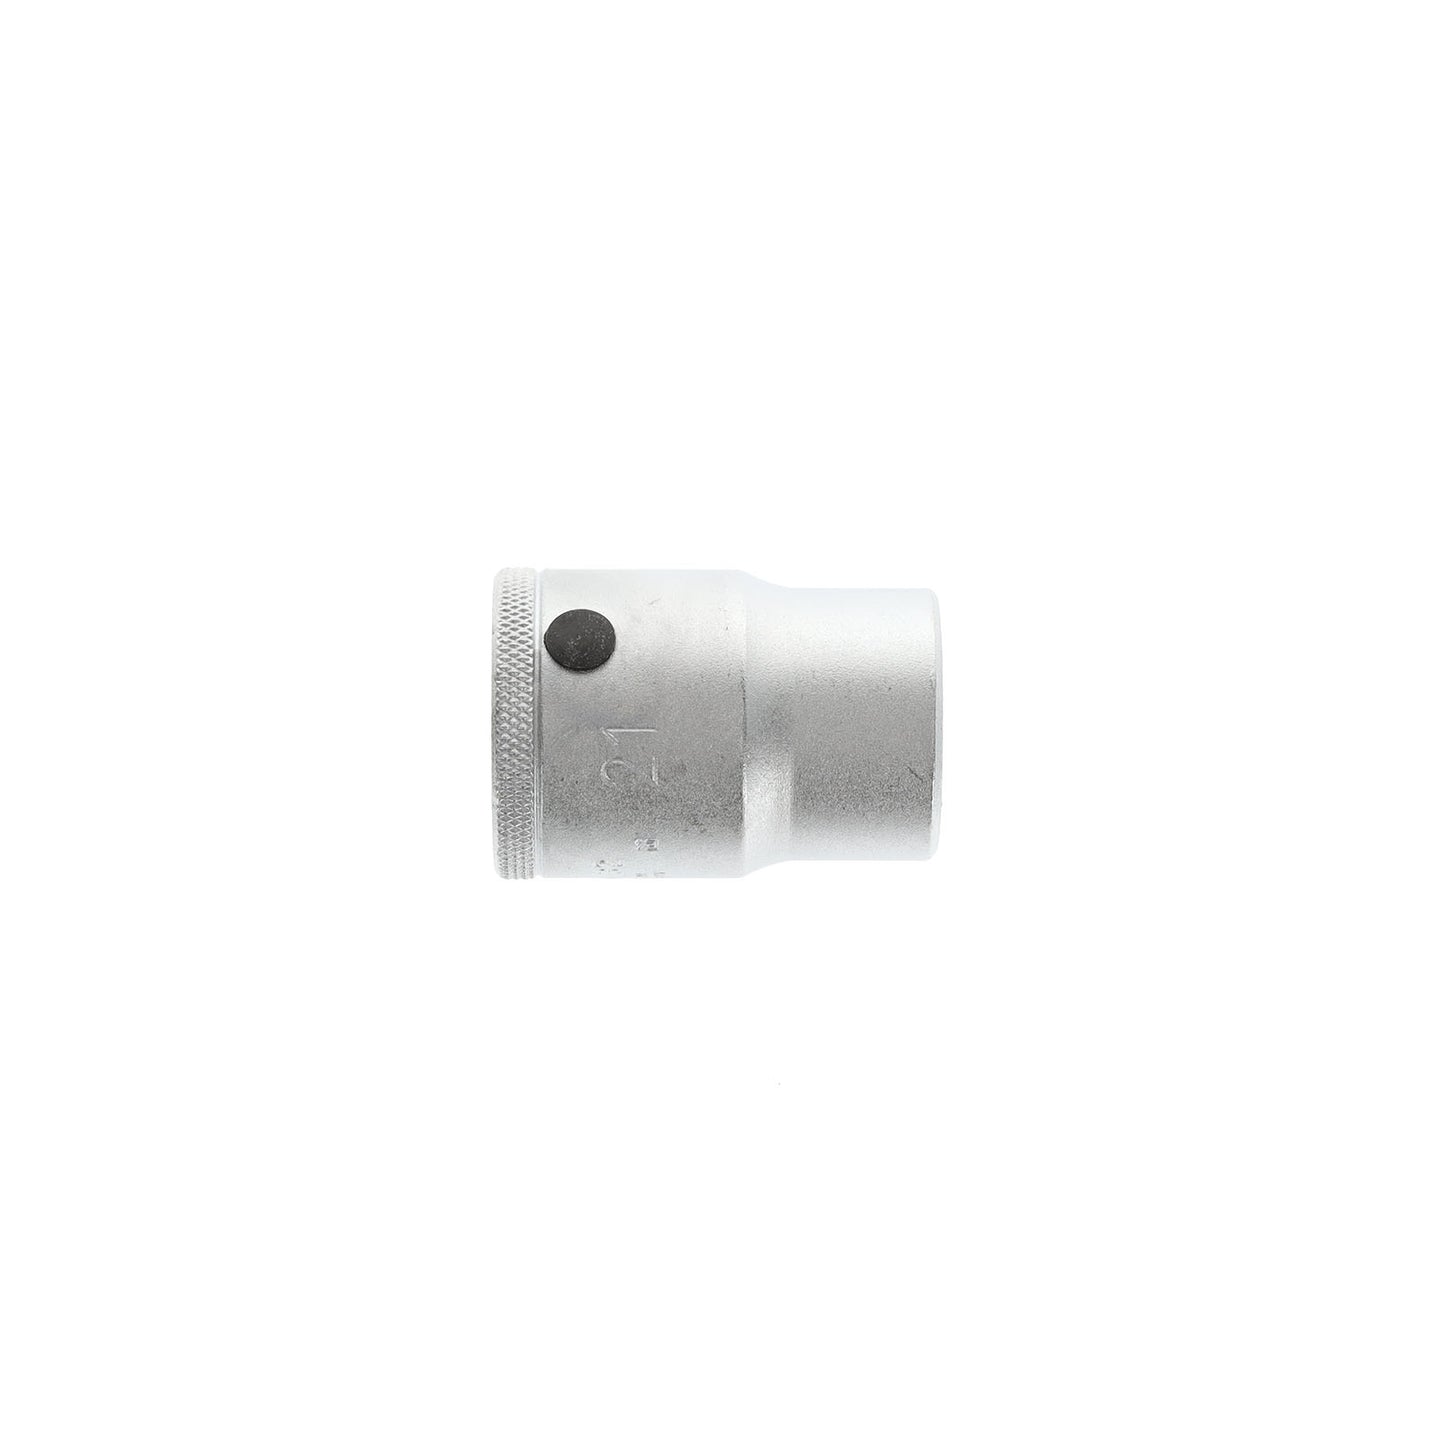 GEDORE 32 21 - Hexagonal Socket 3/4", 21 mm (6269960)